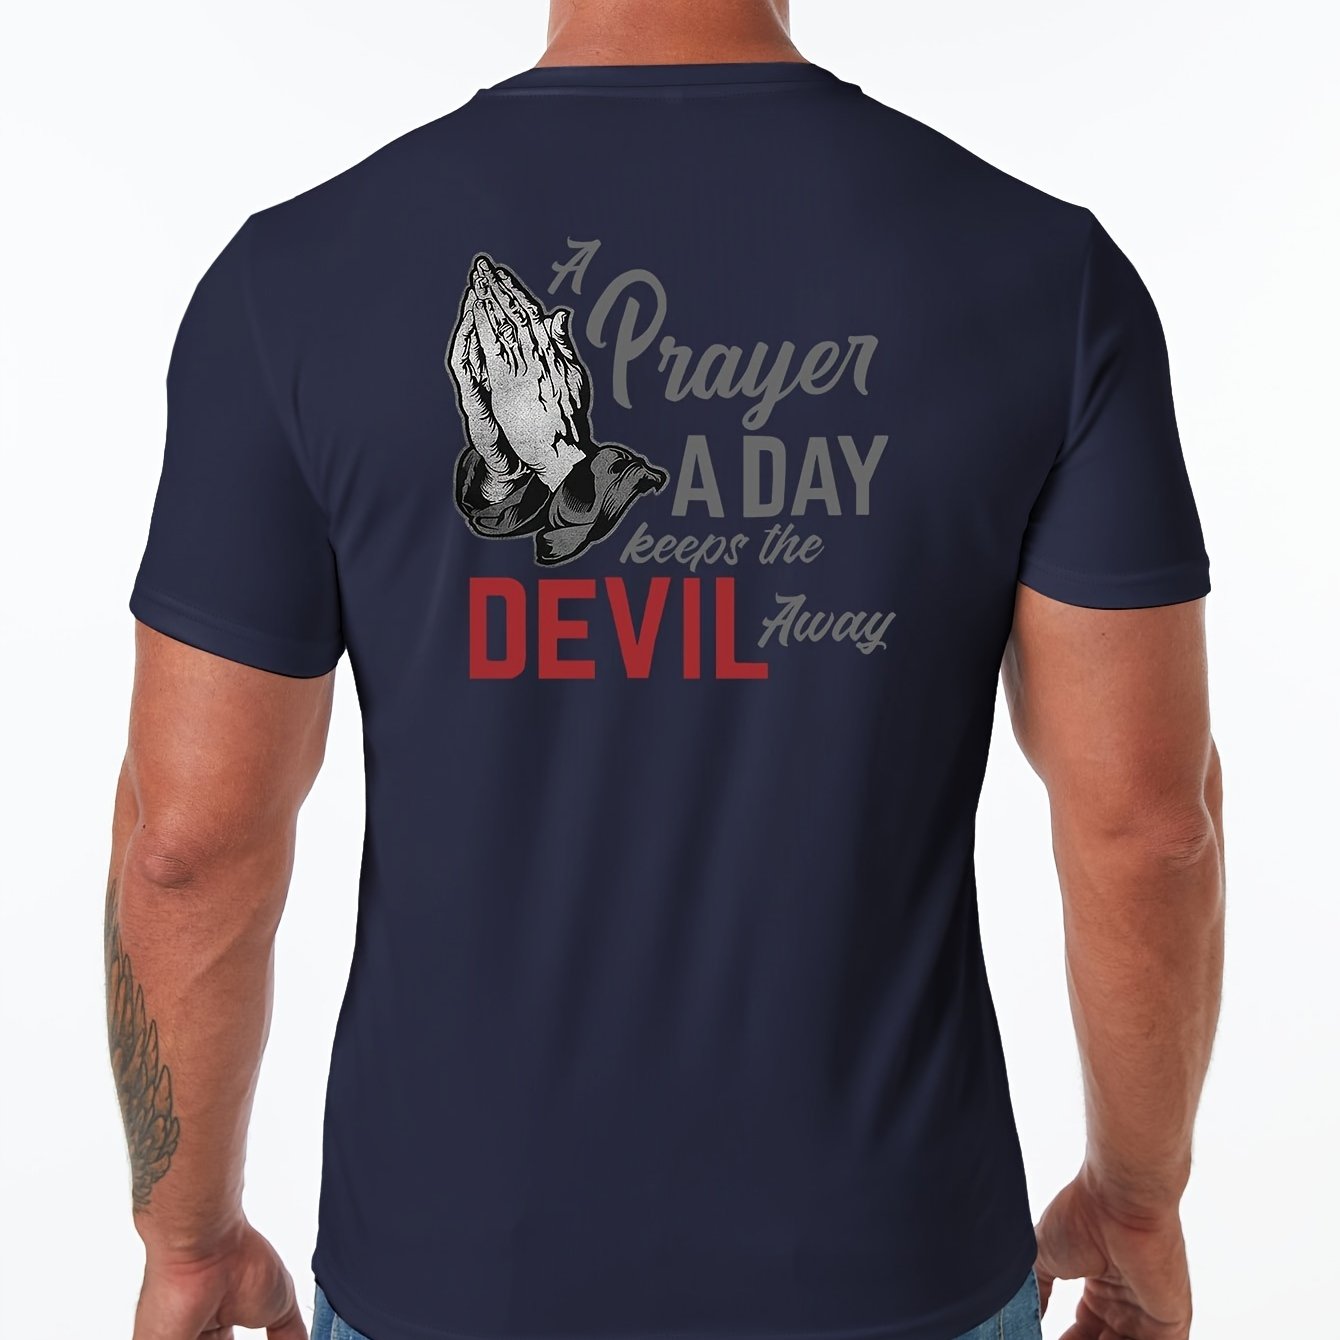 A Prayer A Day Keeps The Devil Away Men's Christian T-shirt claimedbygoddesigns